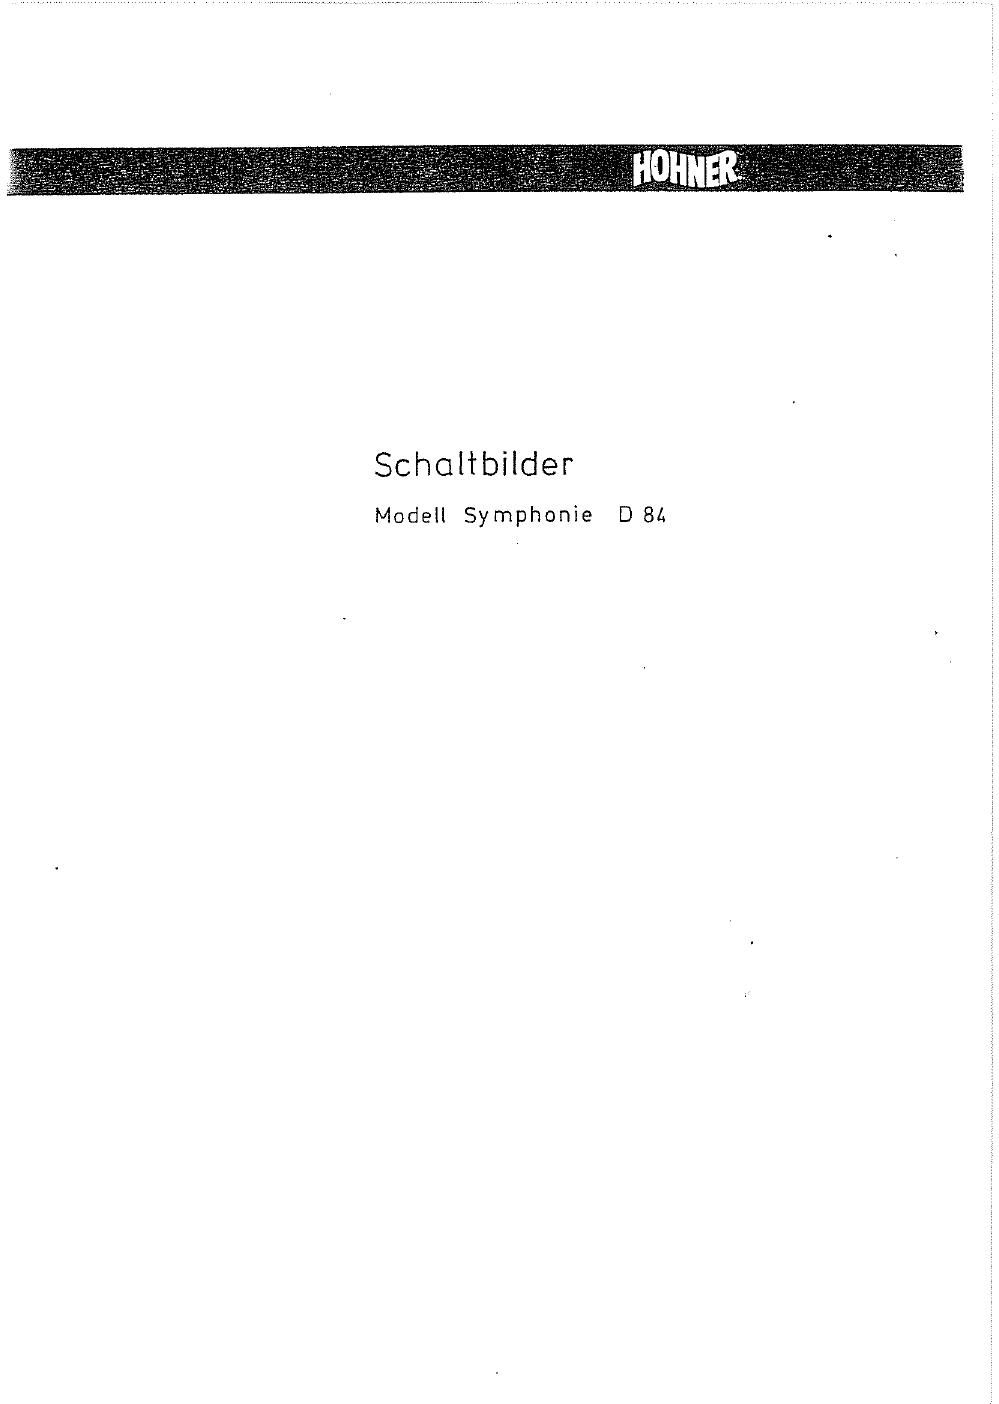 hohner symphonie d84 service manual